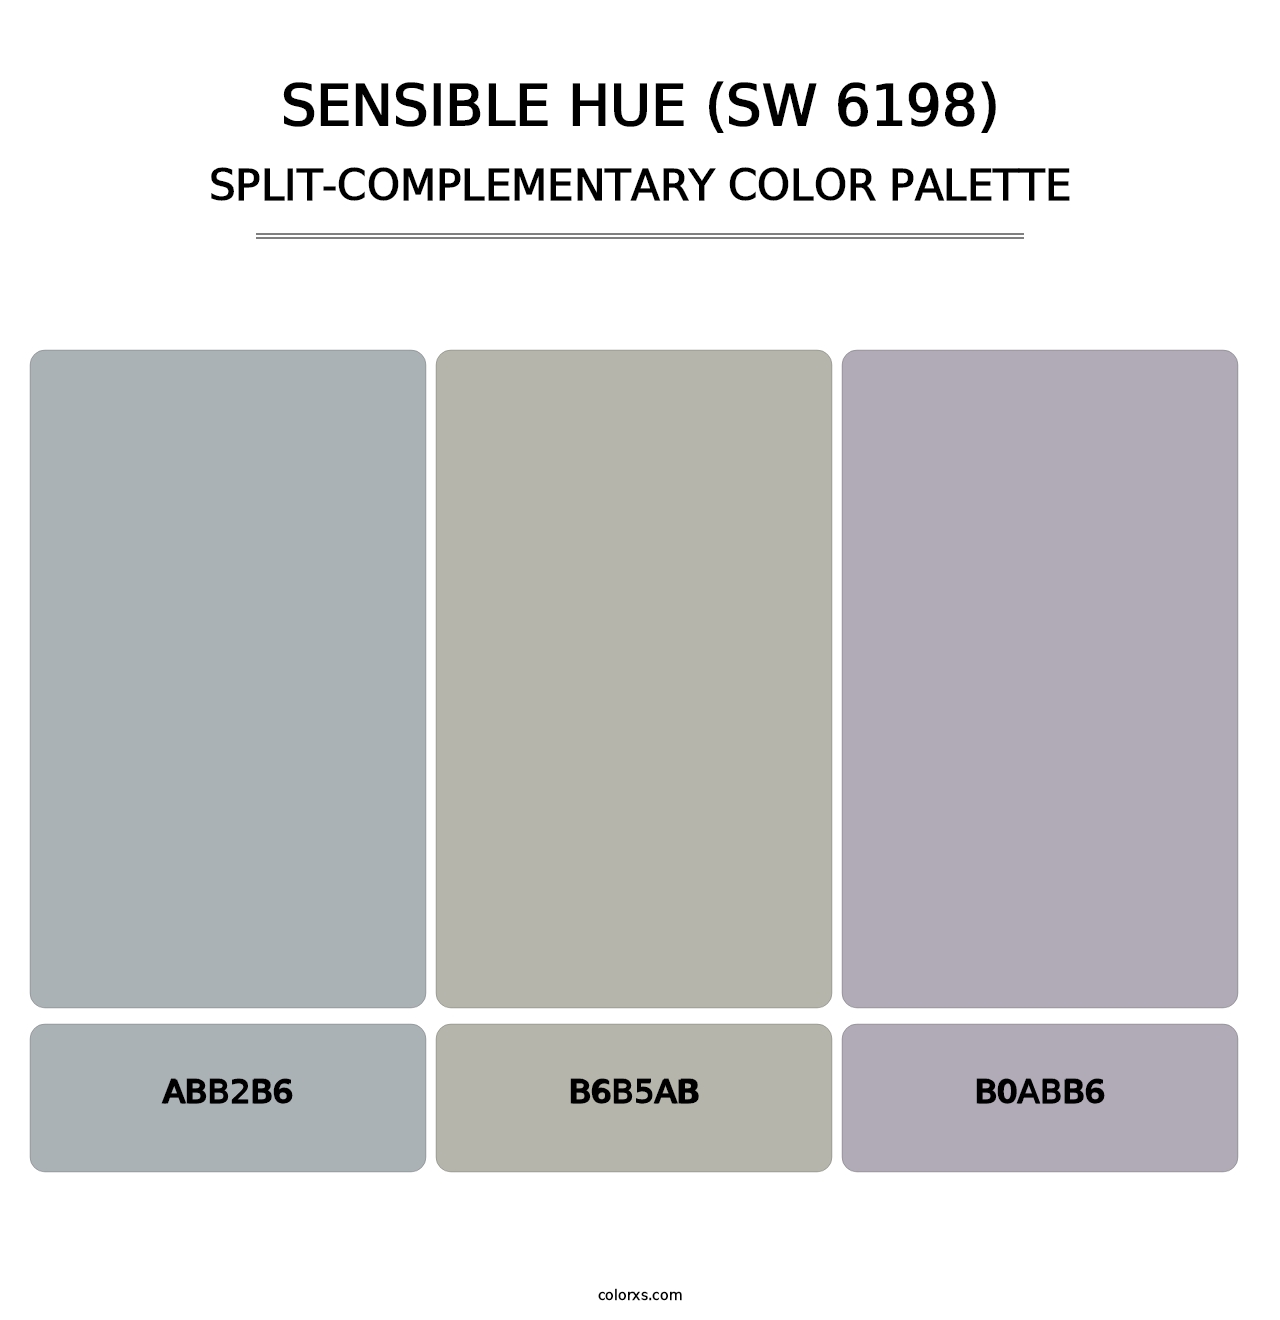 Sensible Hue (SW 6198) - Split-Complementary Color Palette